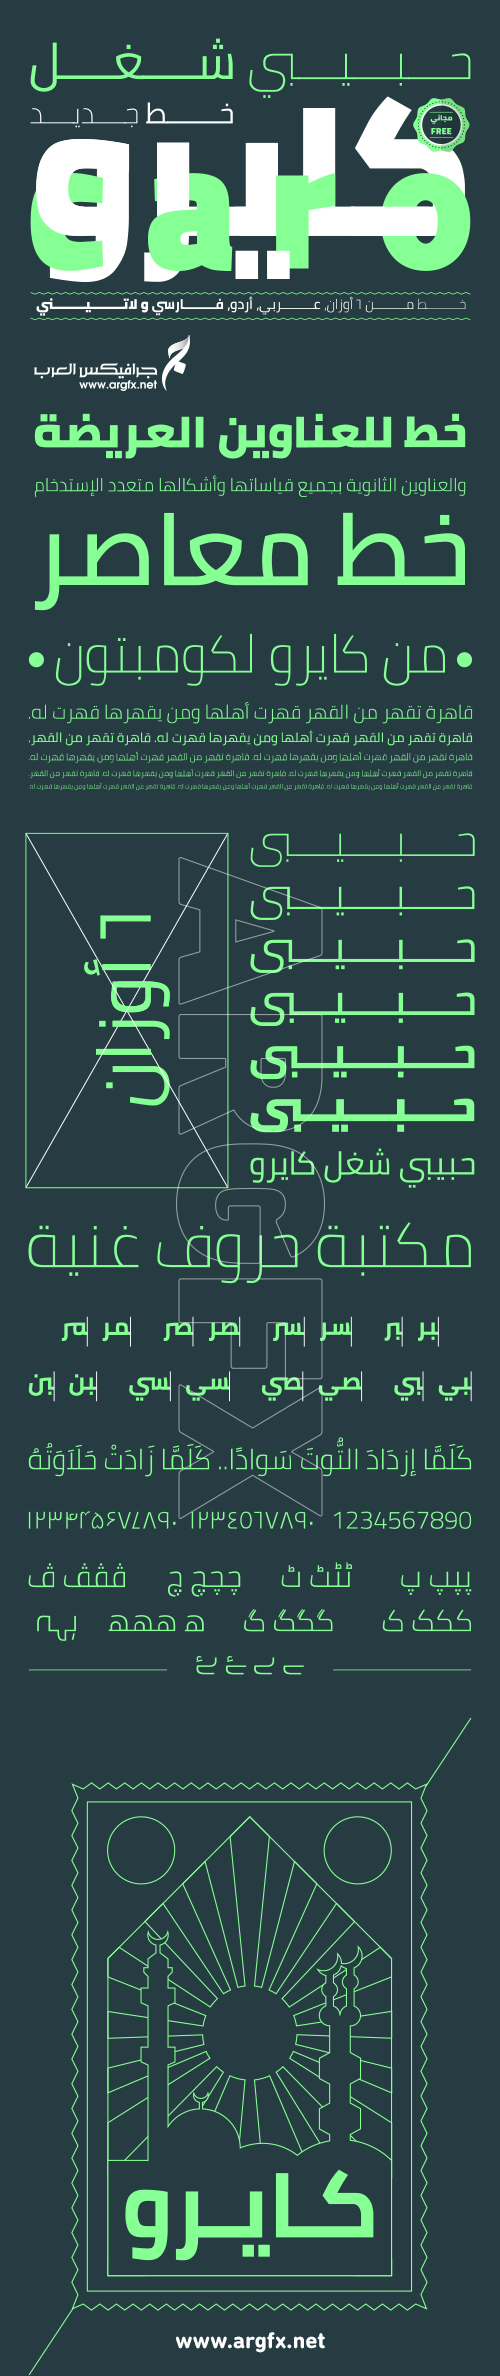 Cairo Arabic Font Family